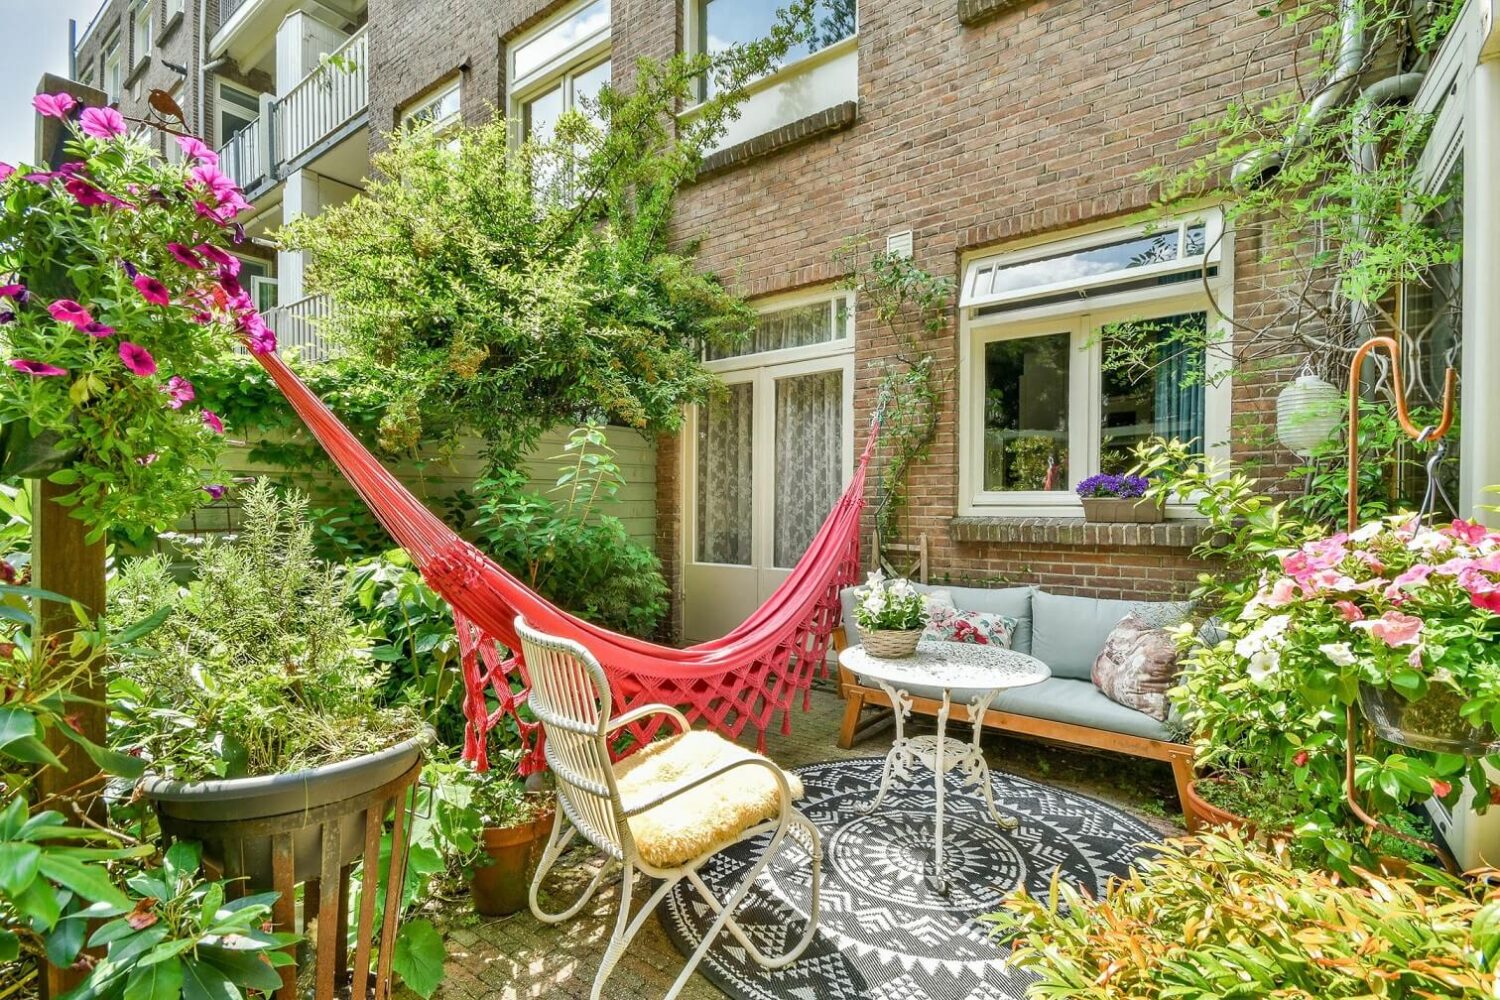 garden-hammock-colorful-home-amsterdam-nordroom